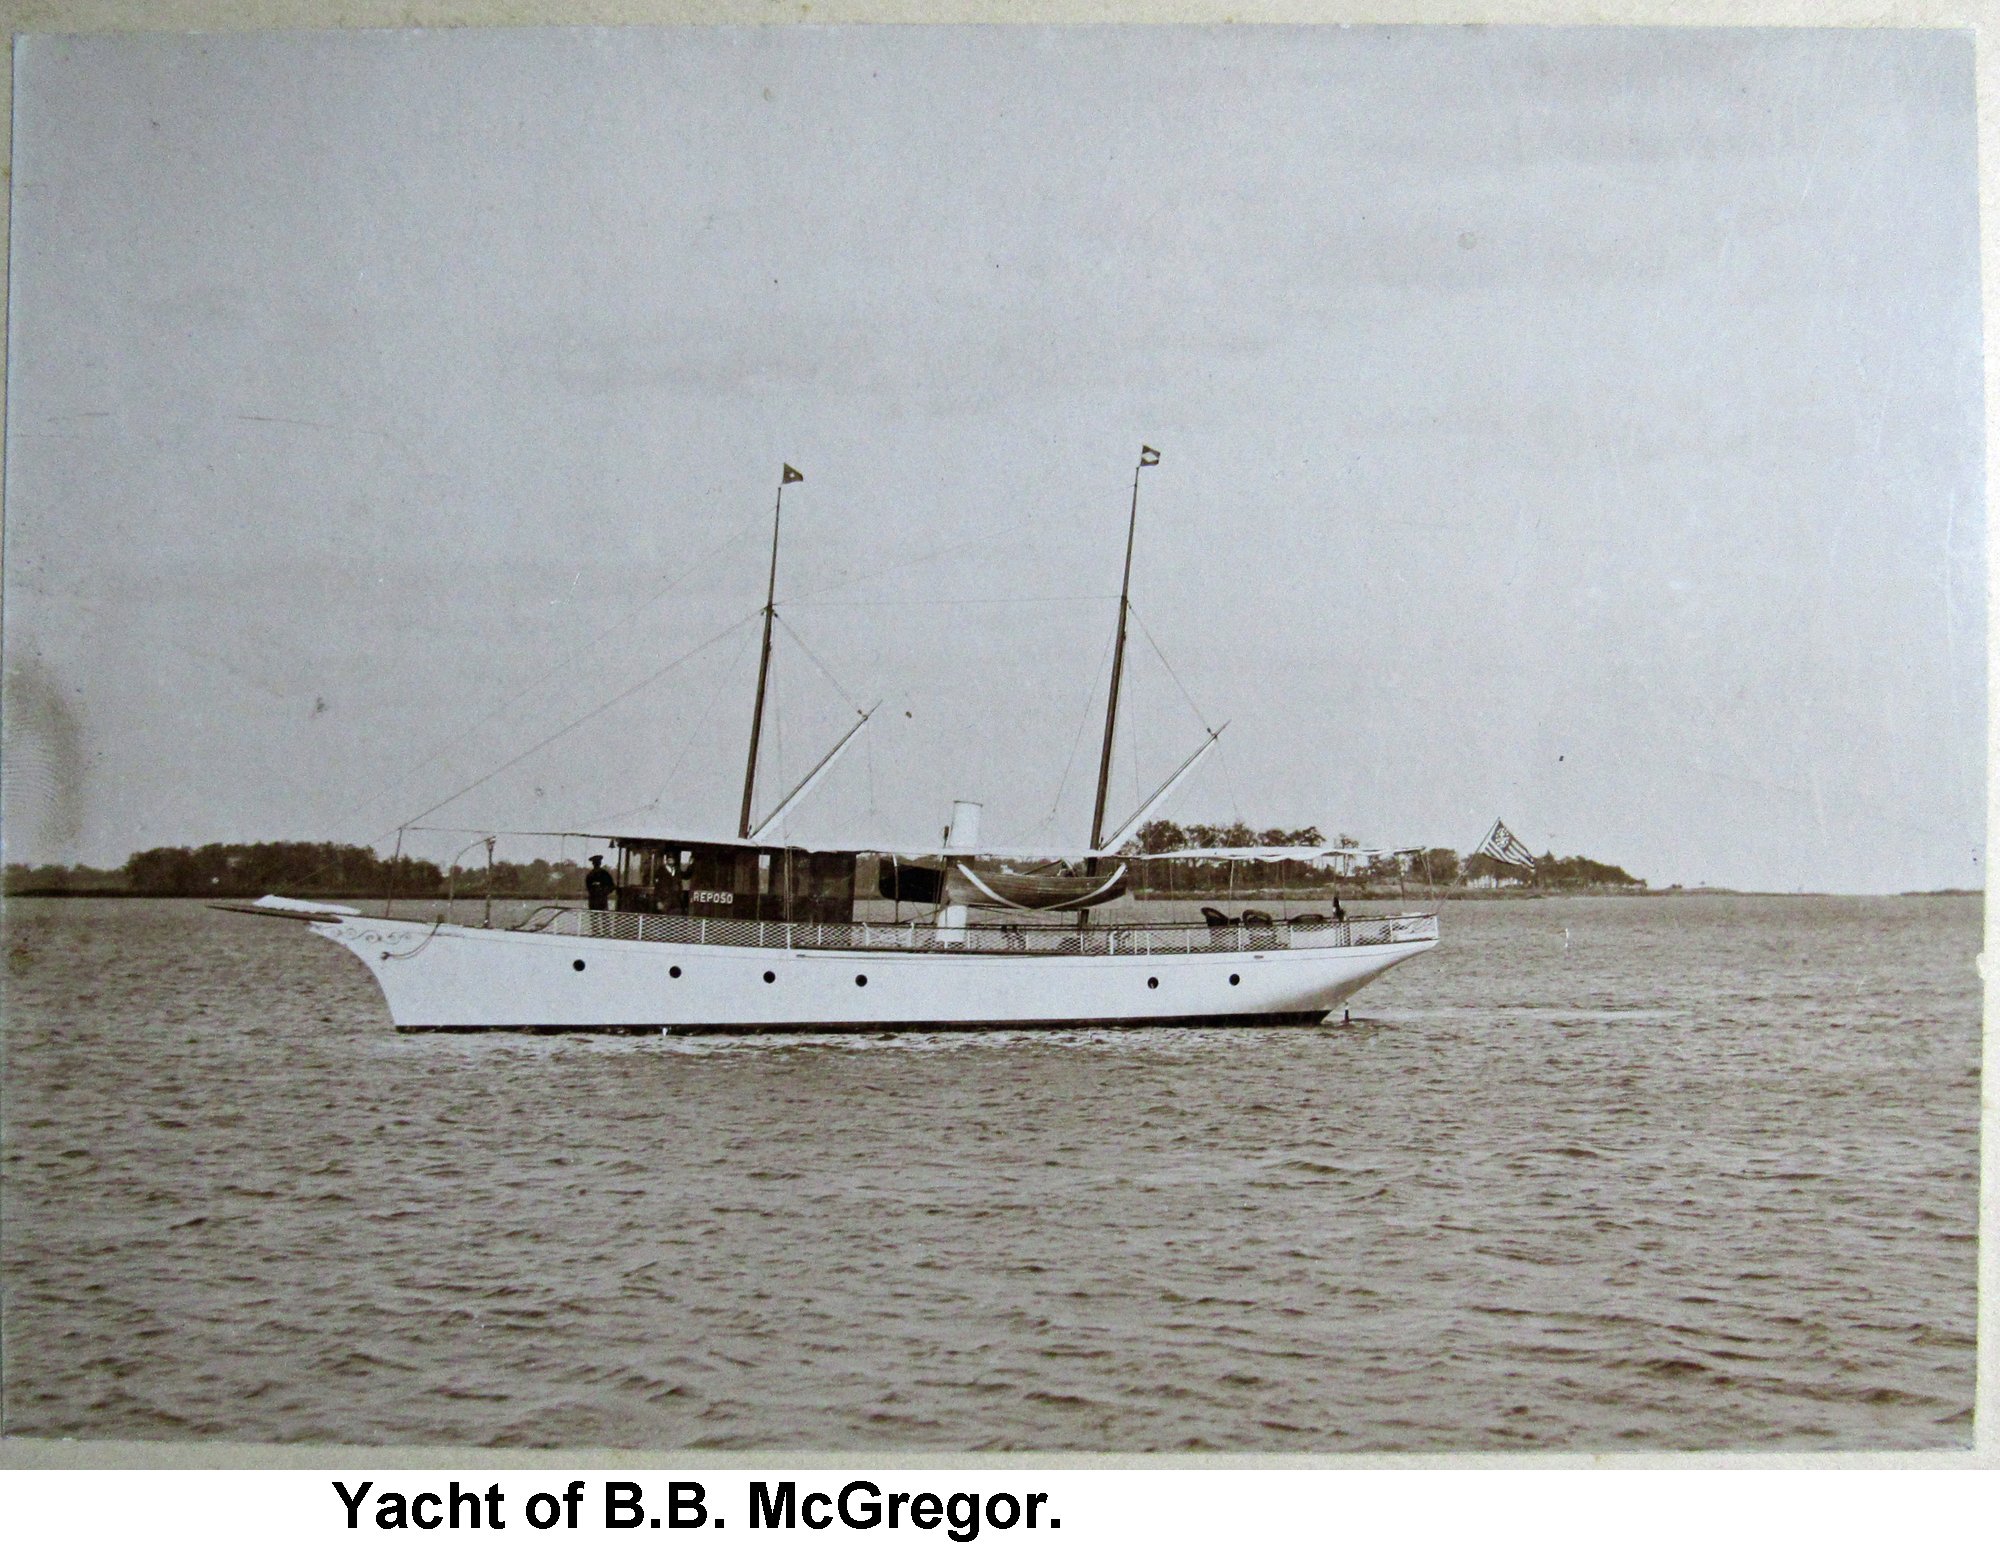 WD-15 Yacht of B.B. McGregor captioned.jpg